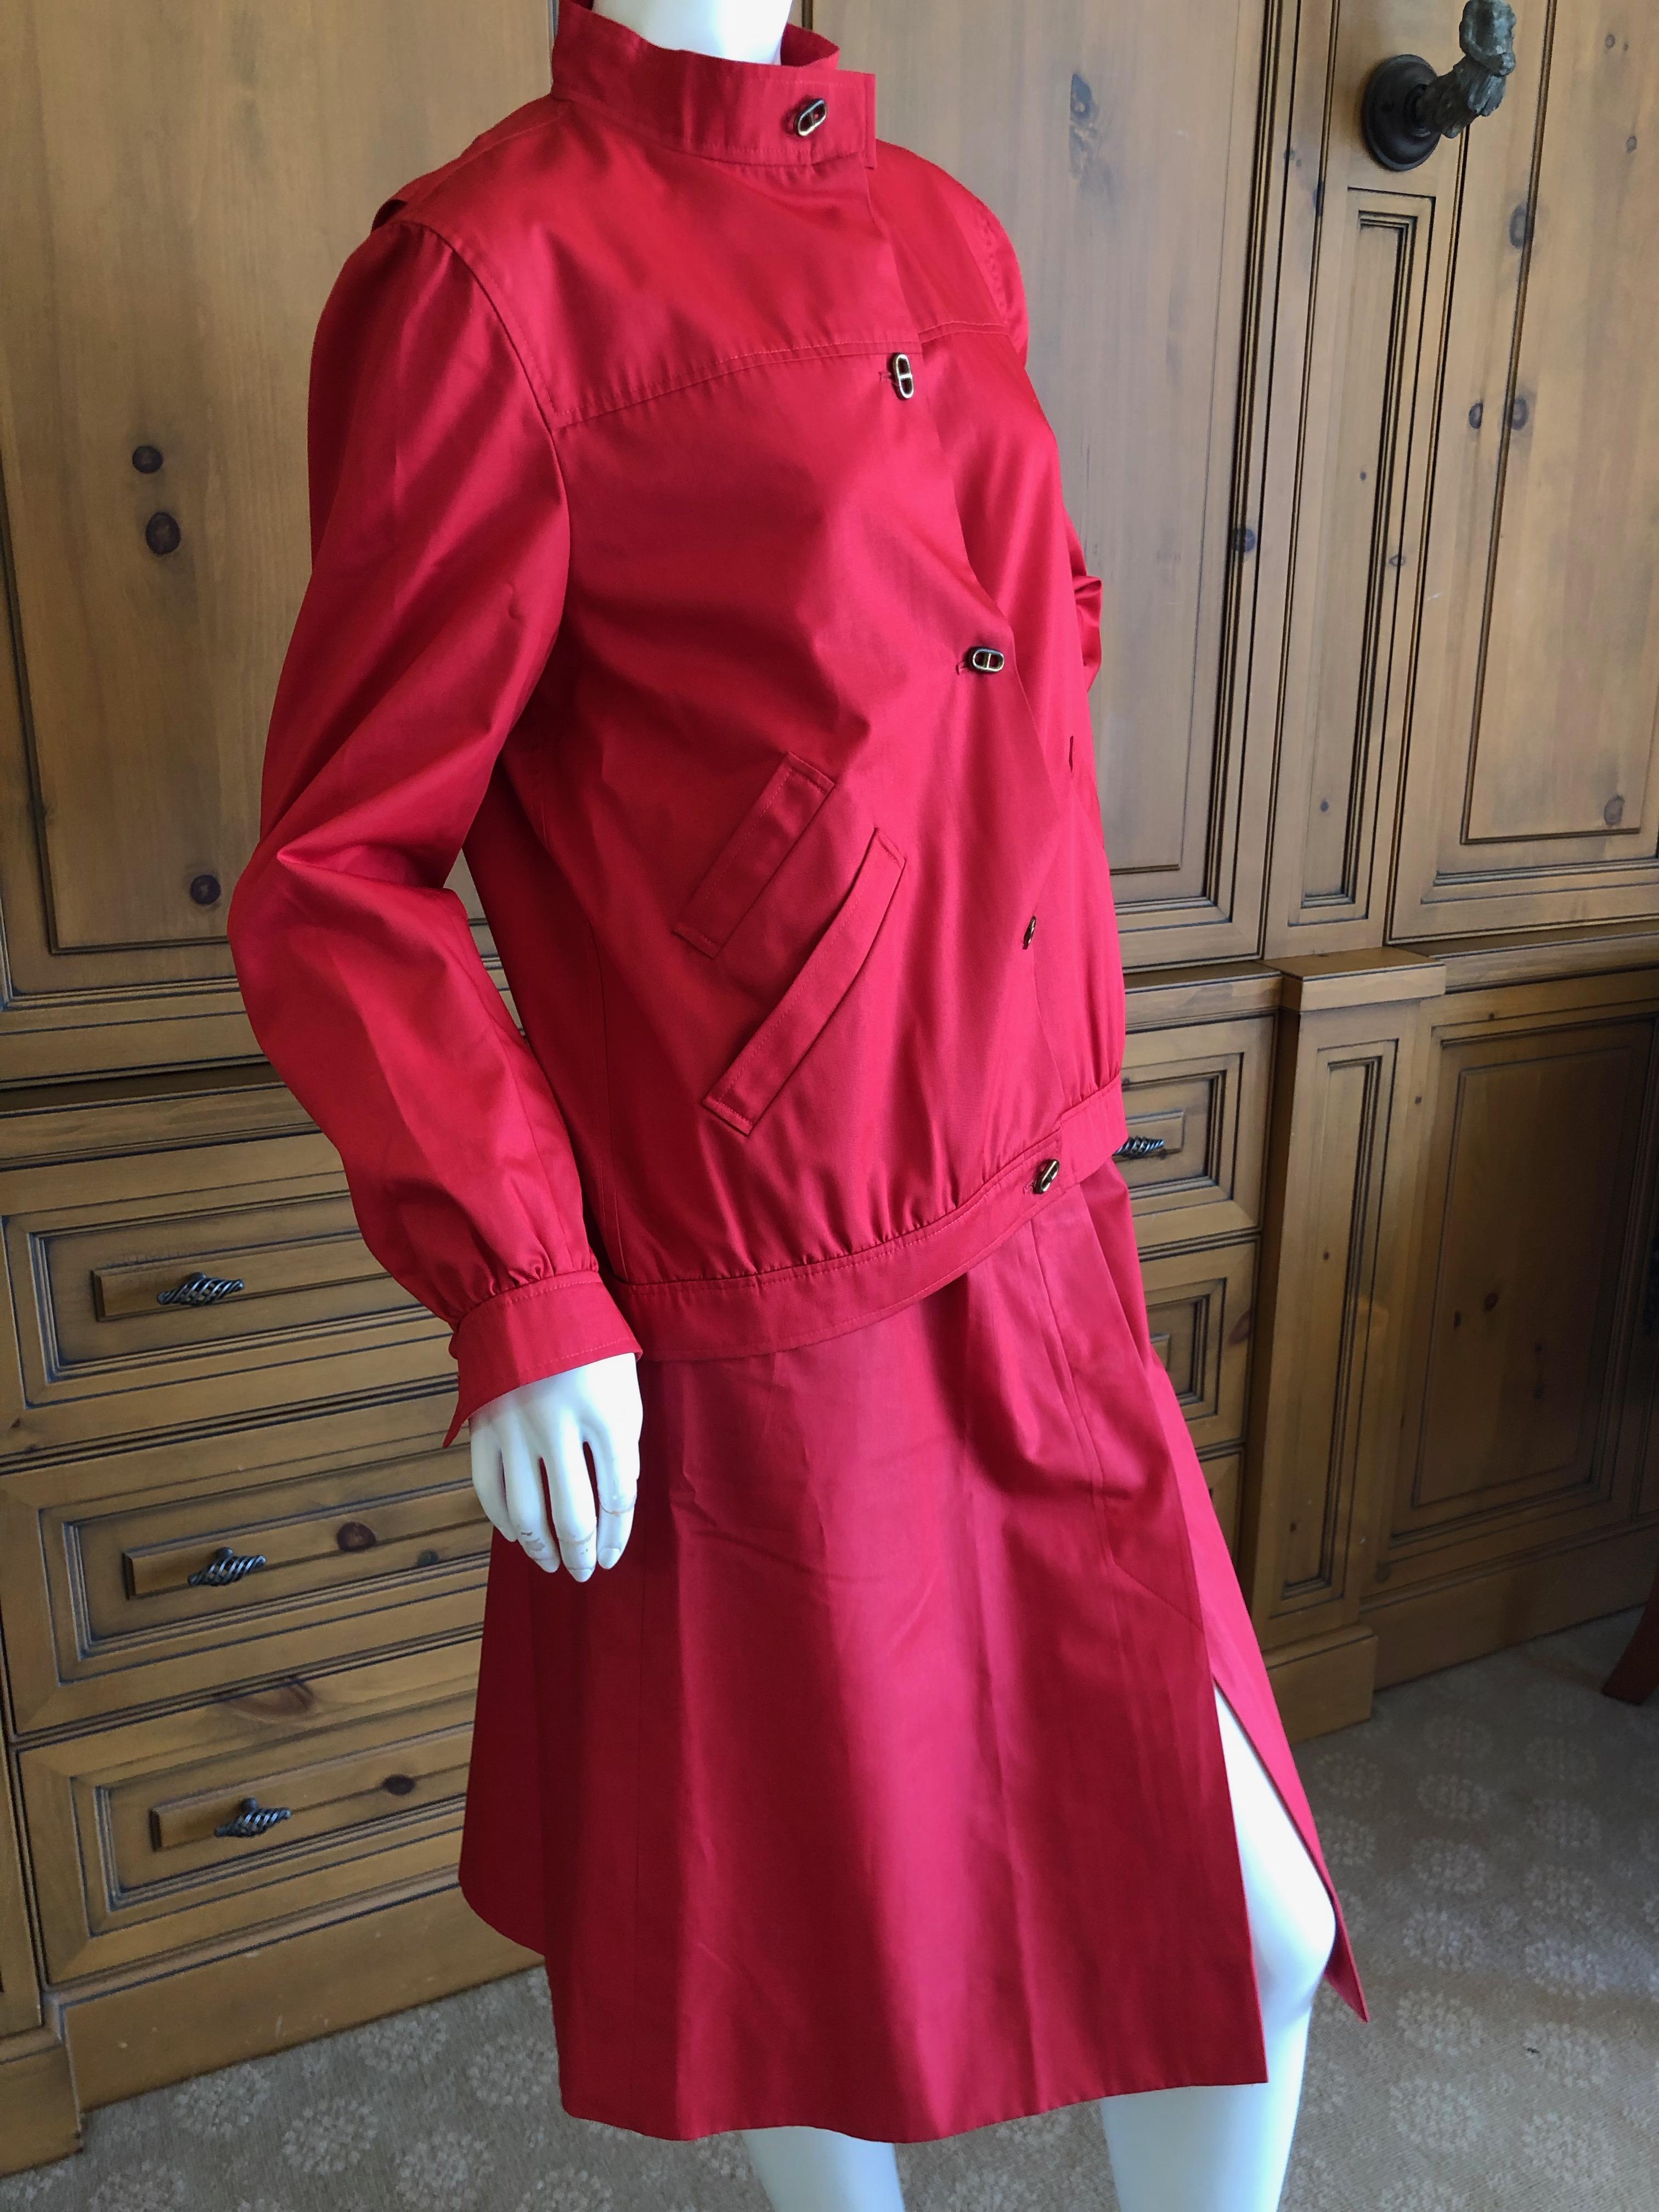 Hermes Paris Vintage Red Polished Cotton Skirt Suit with Signature Details For Sale 4